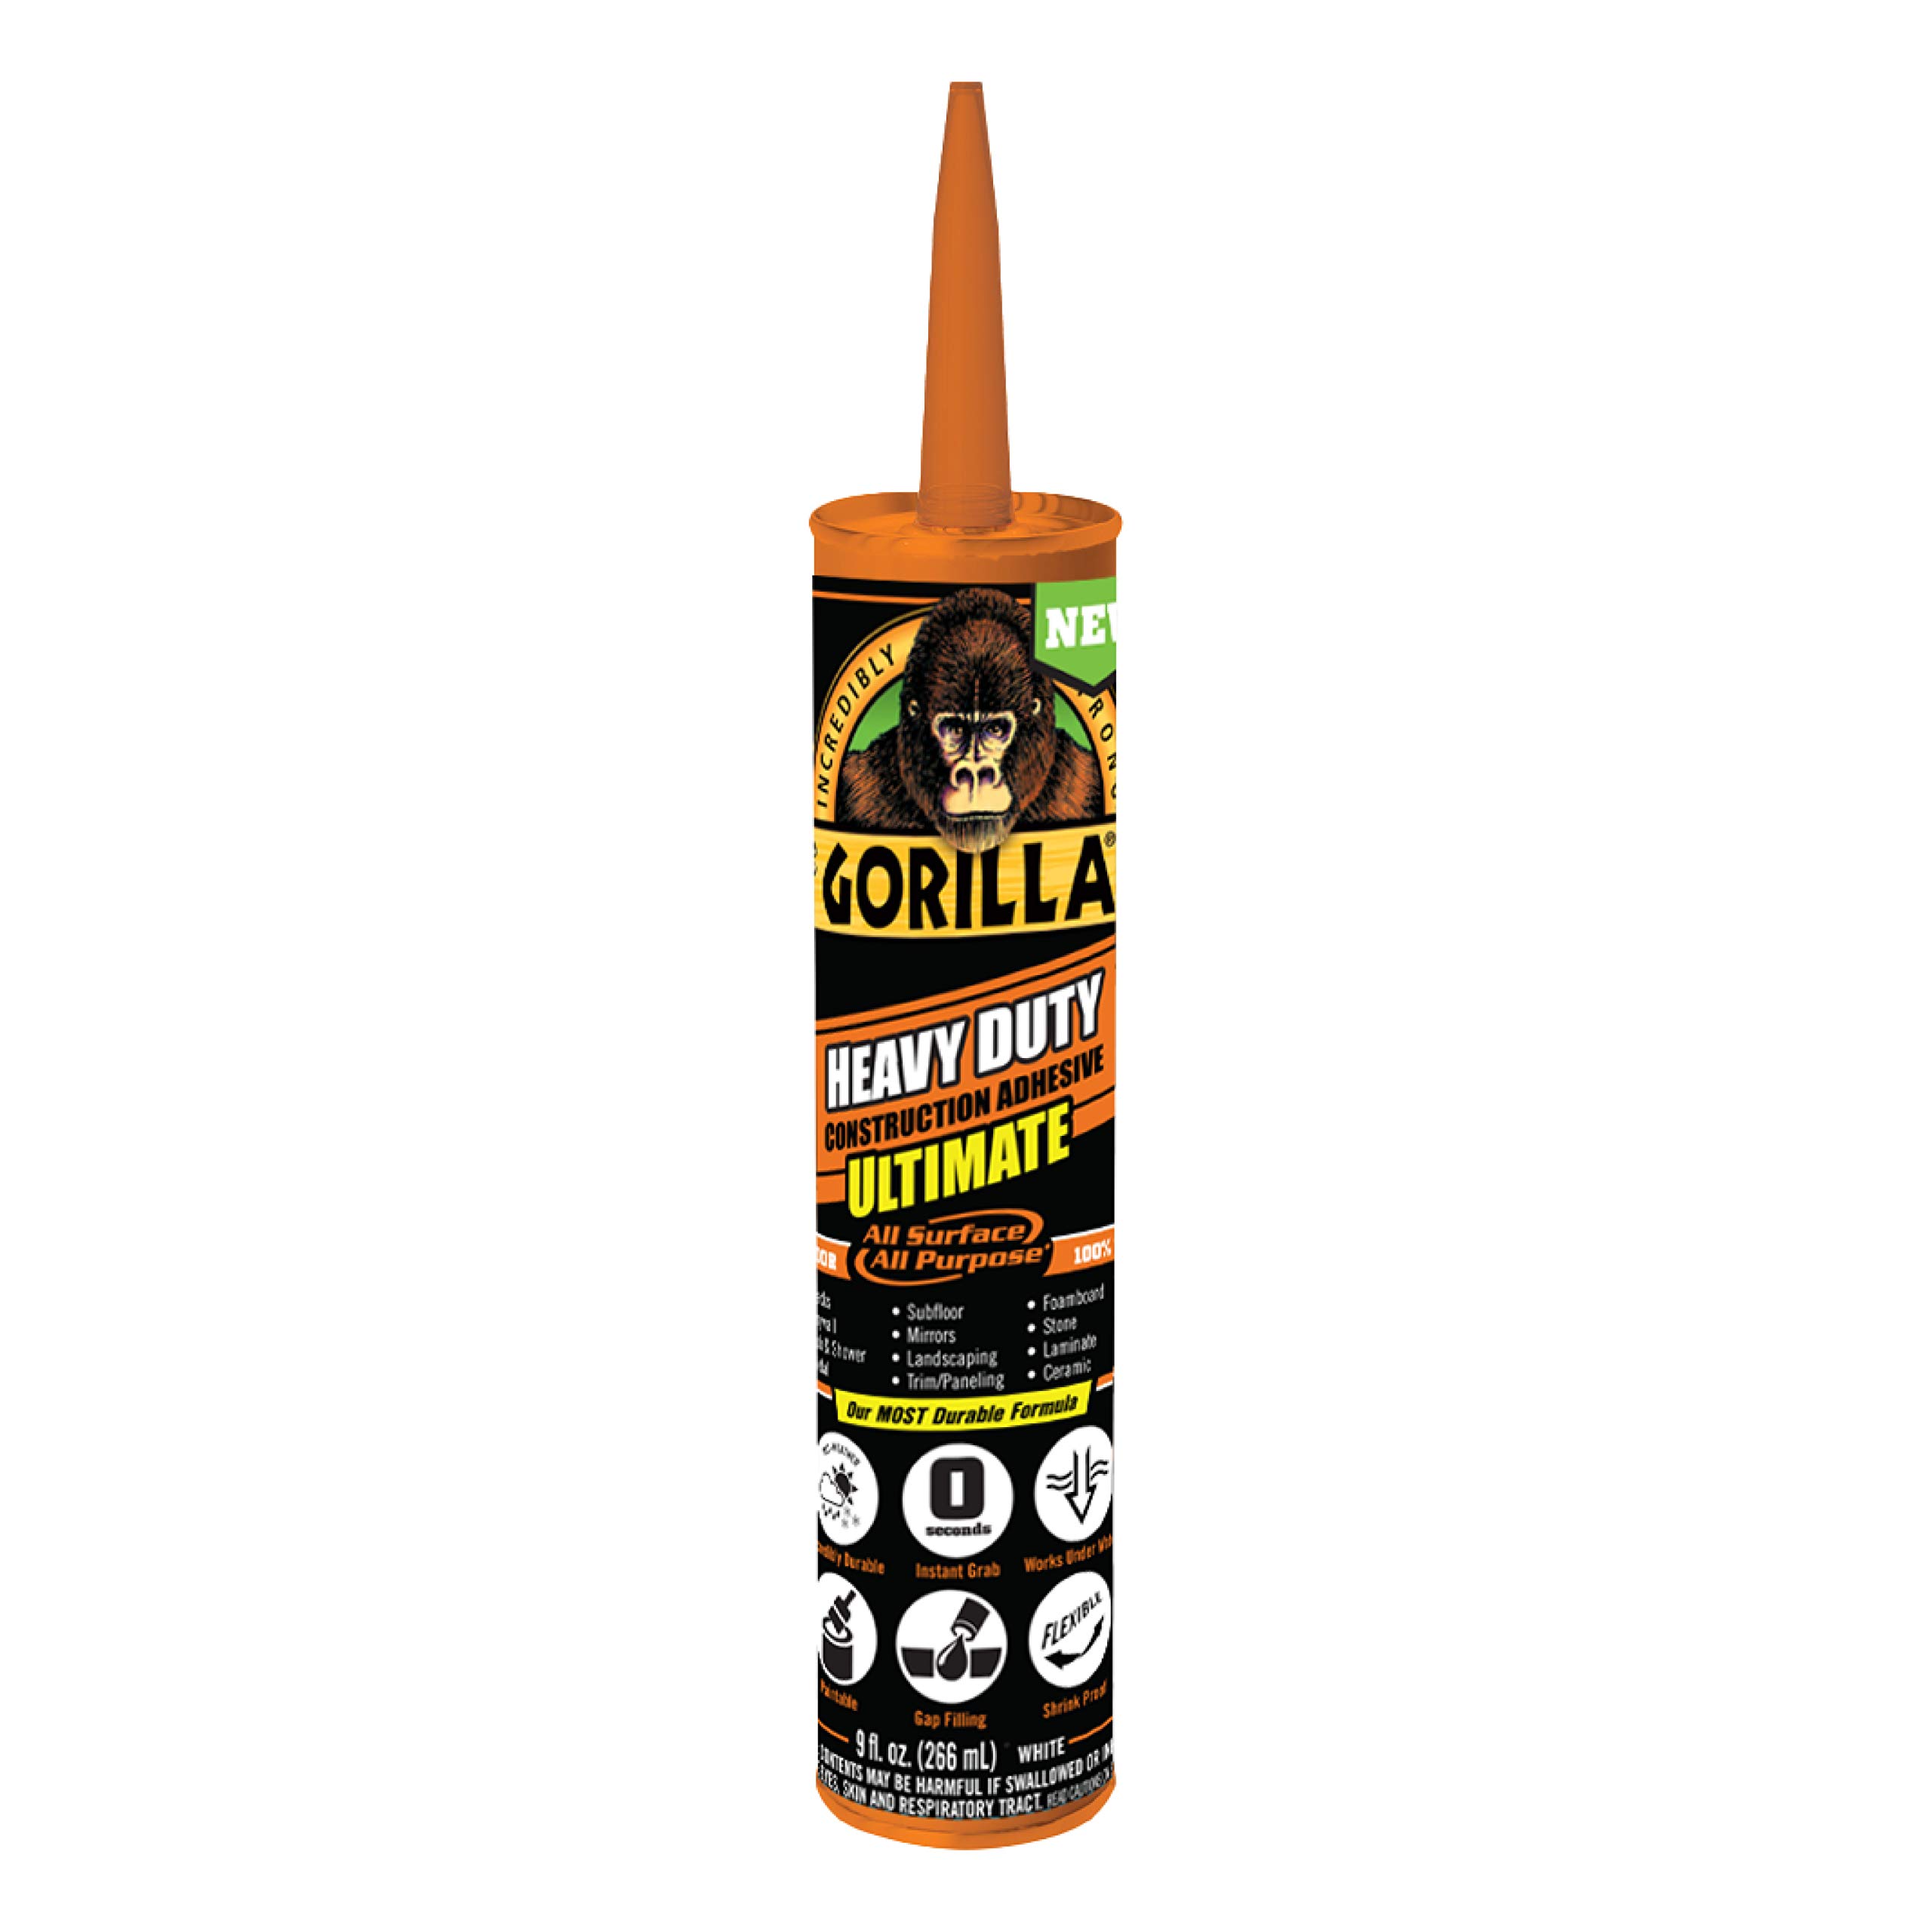 Gorilla Heavy Duty Ultimate Construction Adhesive